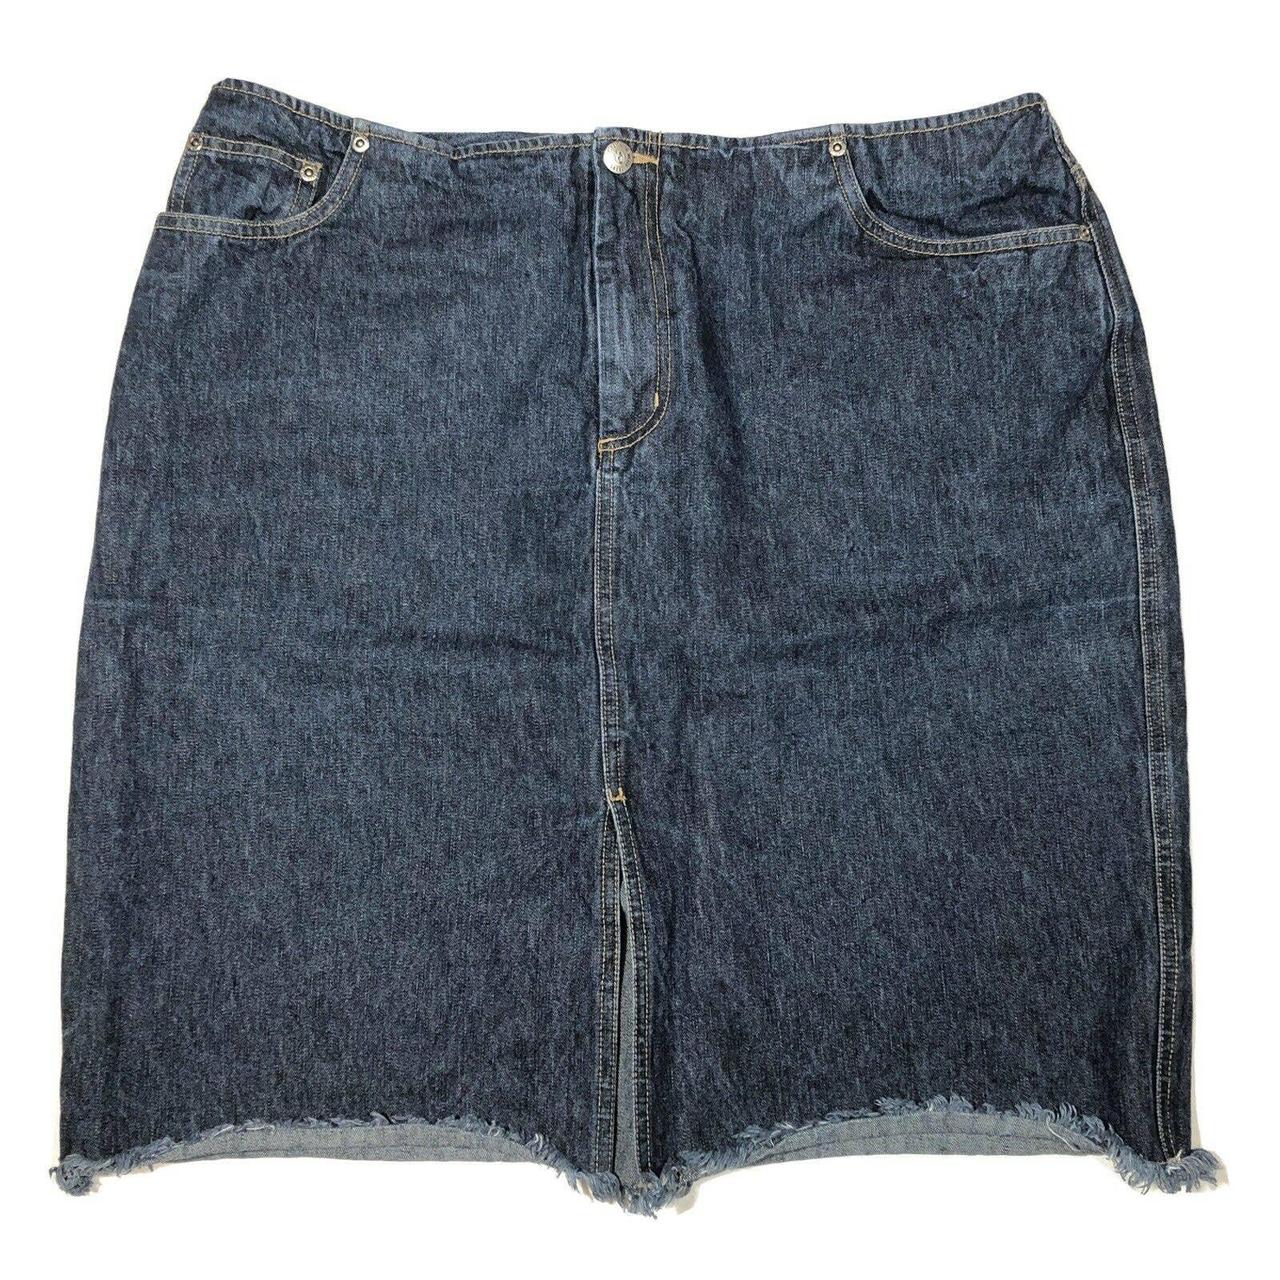 Vintage Jean Skirt Venezia Denim Knee Length Raw... - Depop